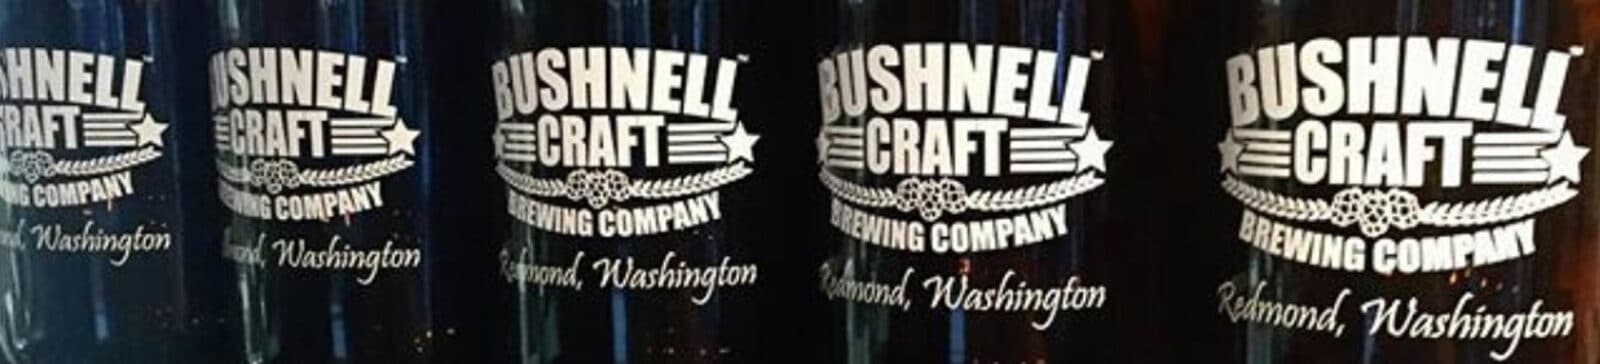 Bushnell Craft Brewing Company